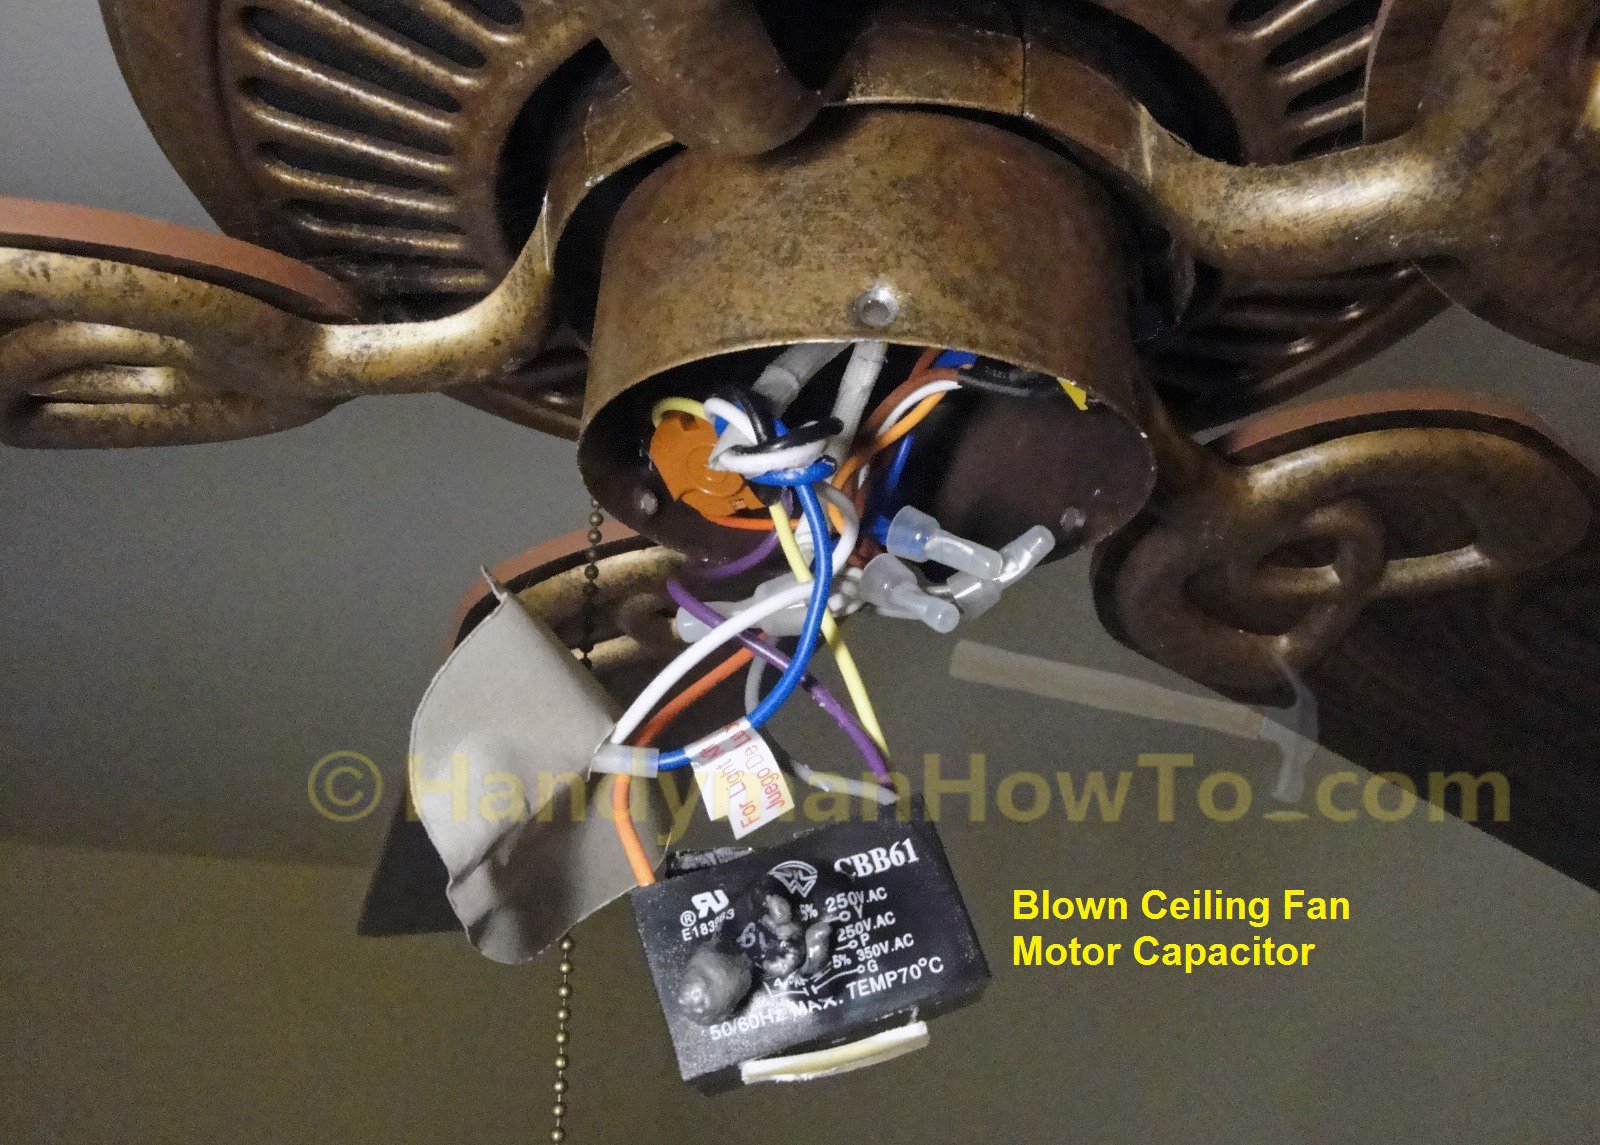 Hampton Bay Ceiling Fan Model EF200DA-52: Blown Motor Capacitor